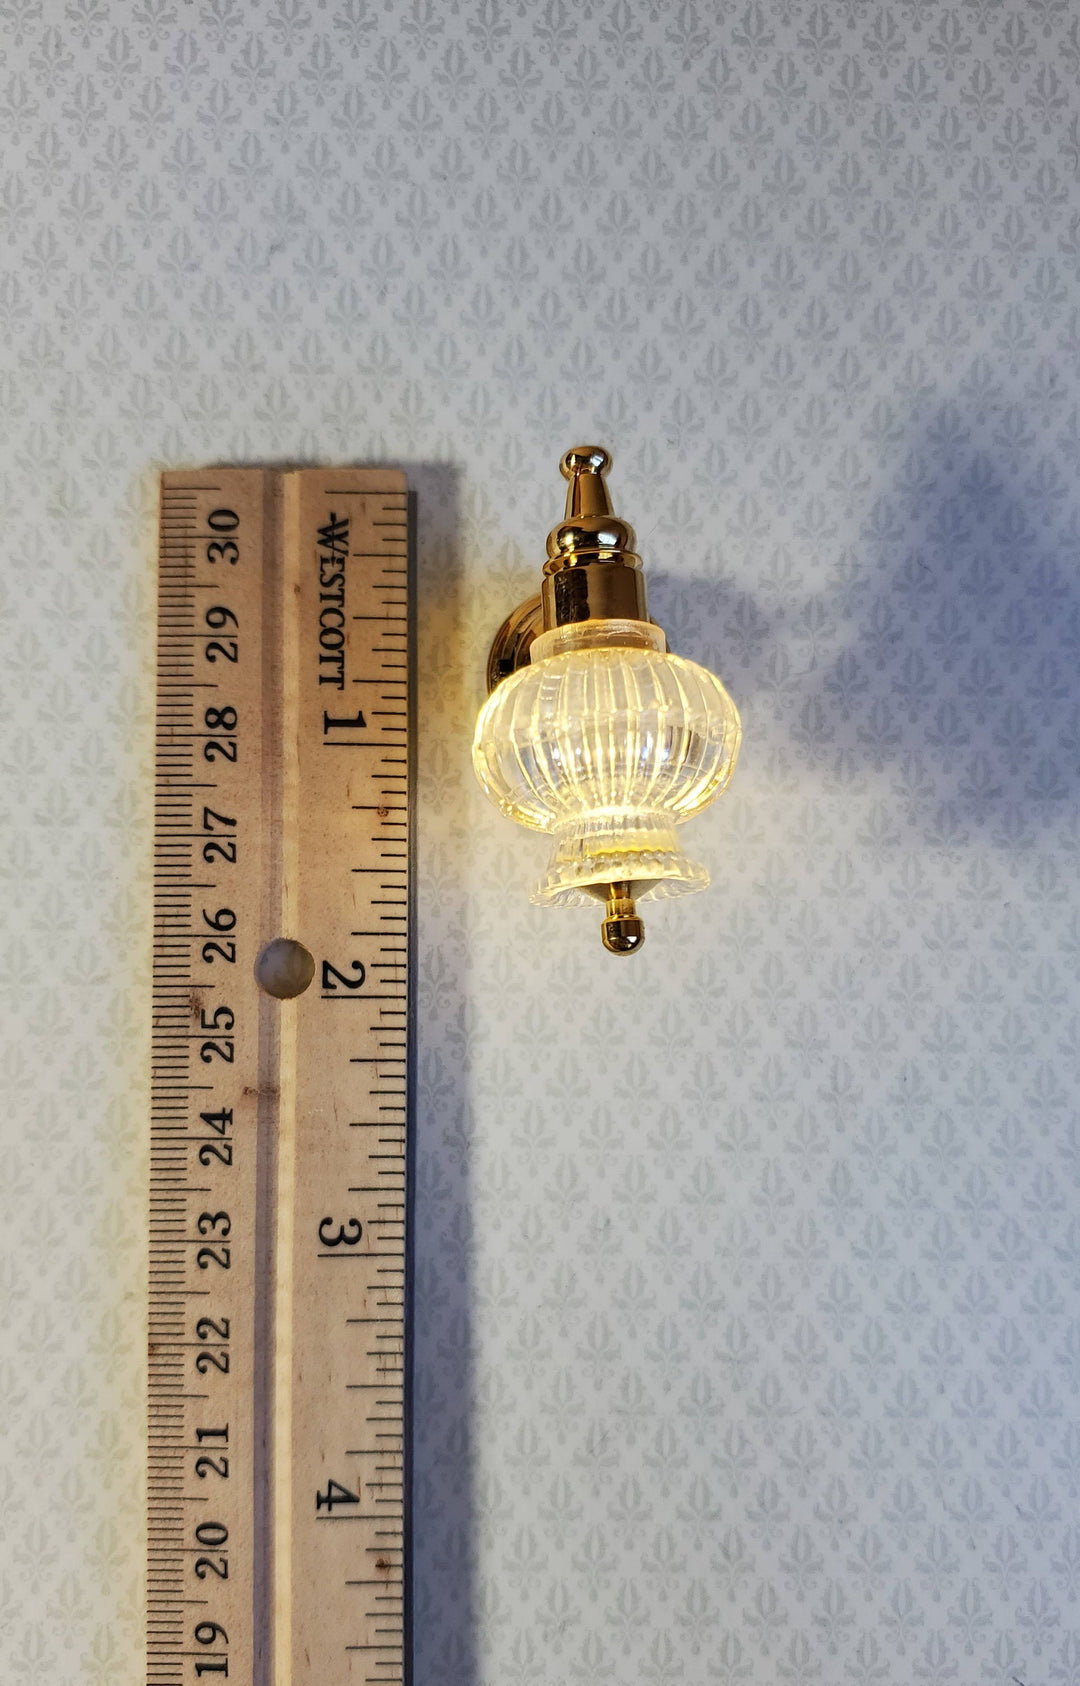 Dollhouse Battery Light Large Wall Sconce 1:12 Scale Miniature Warn Light Bulb